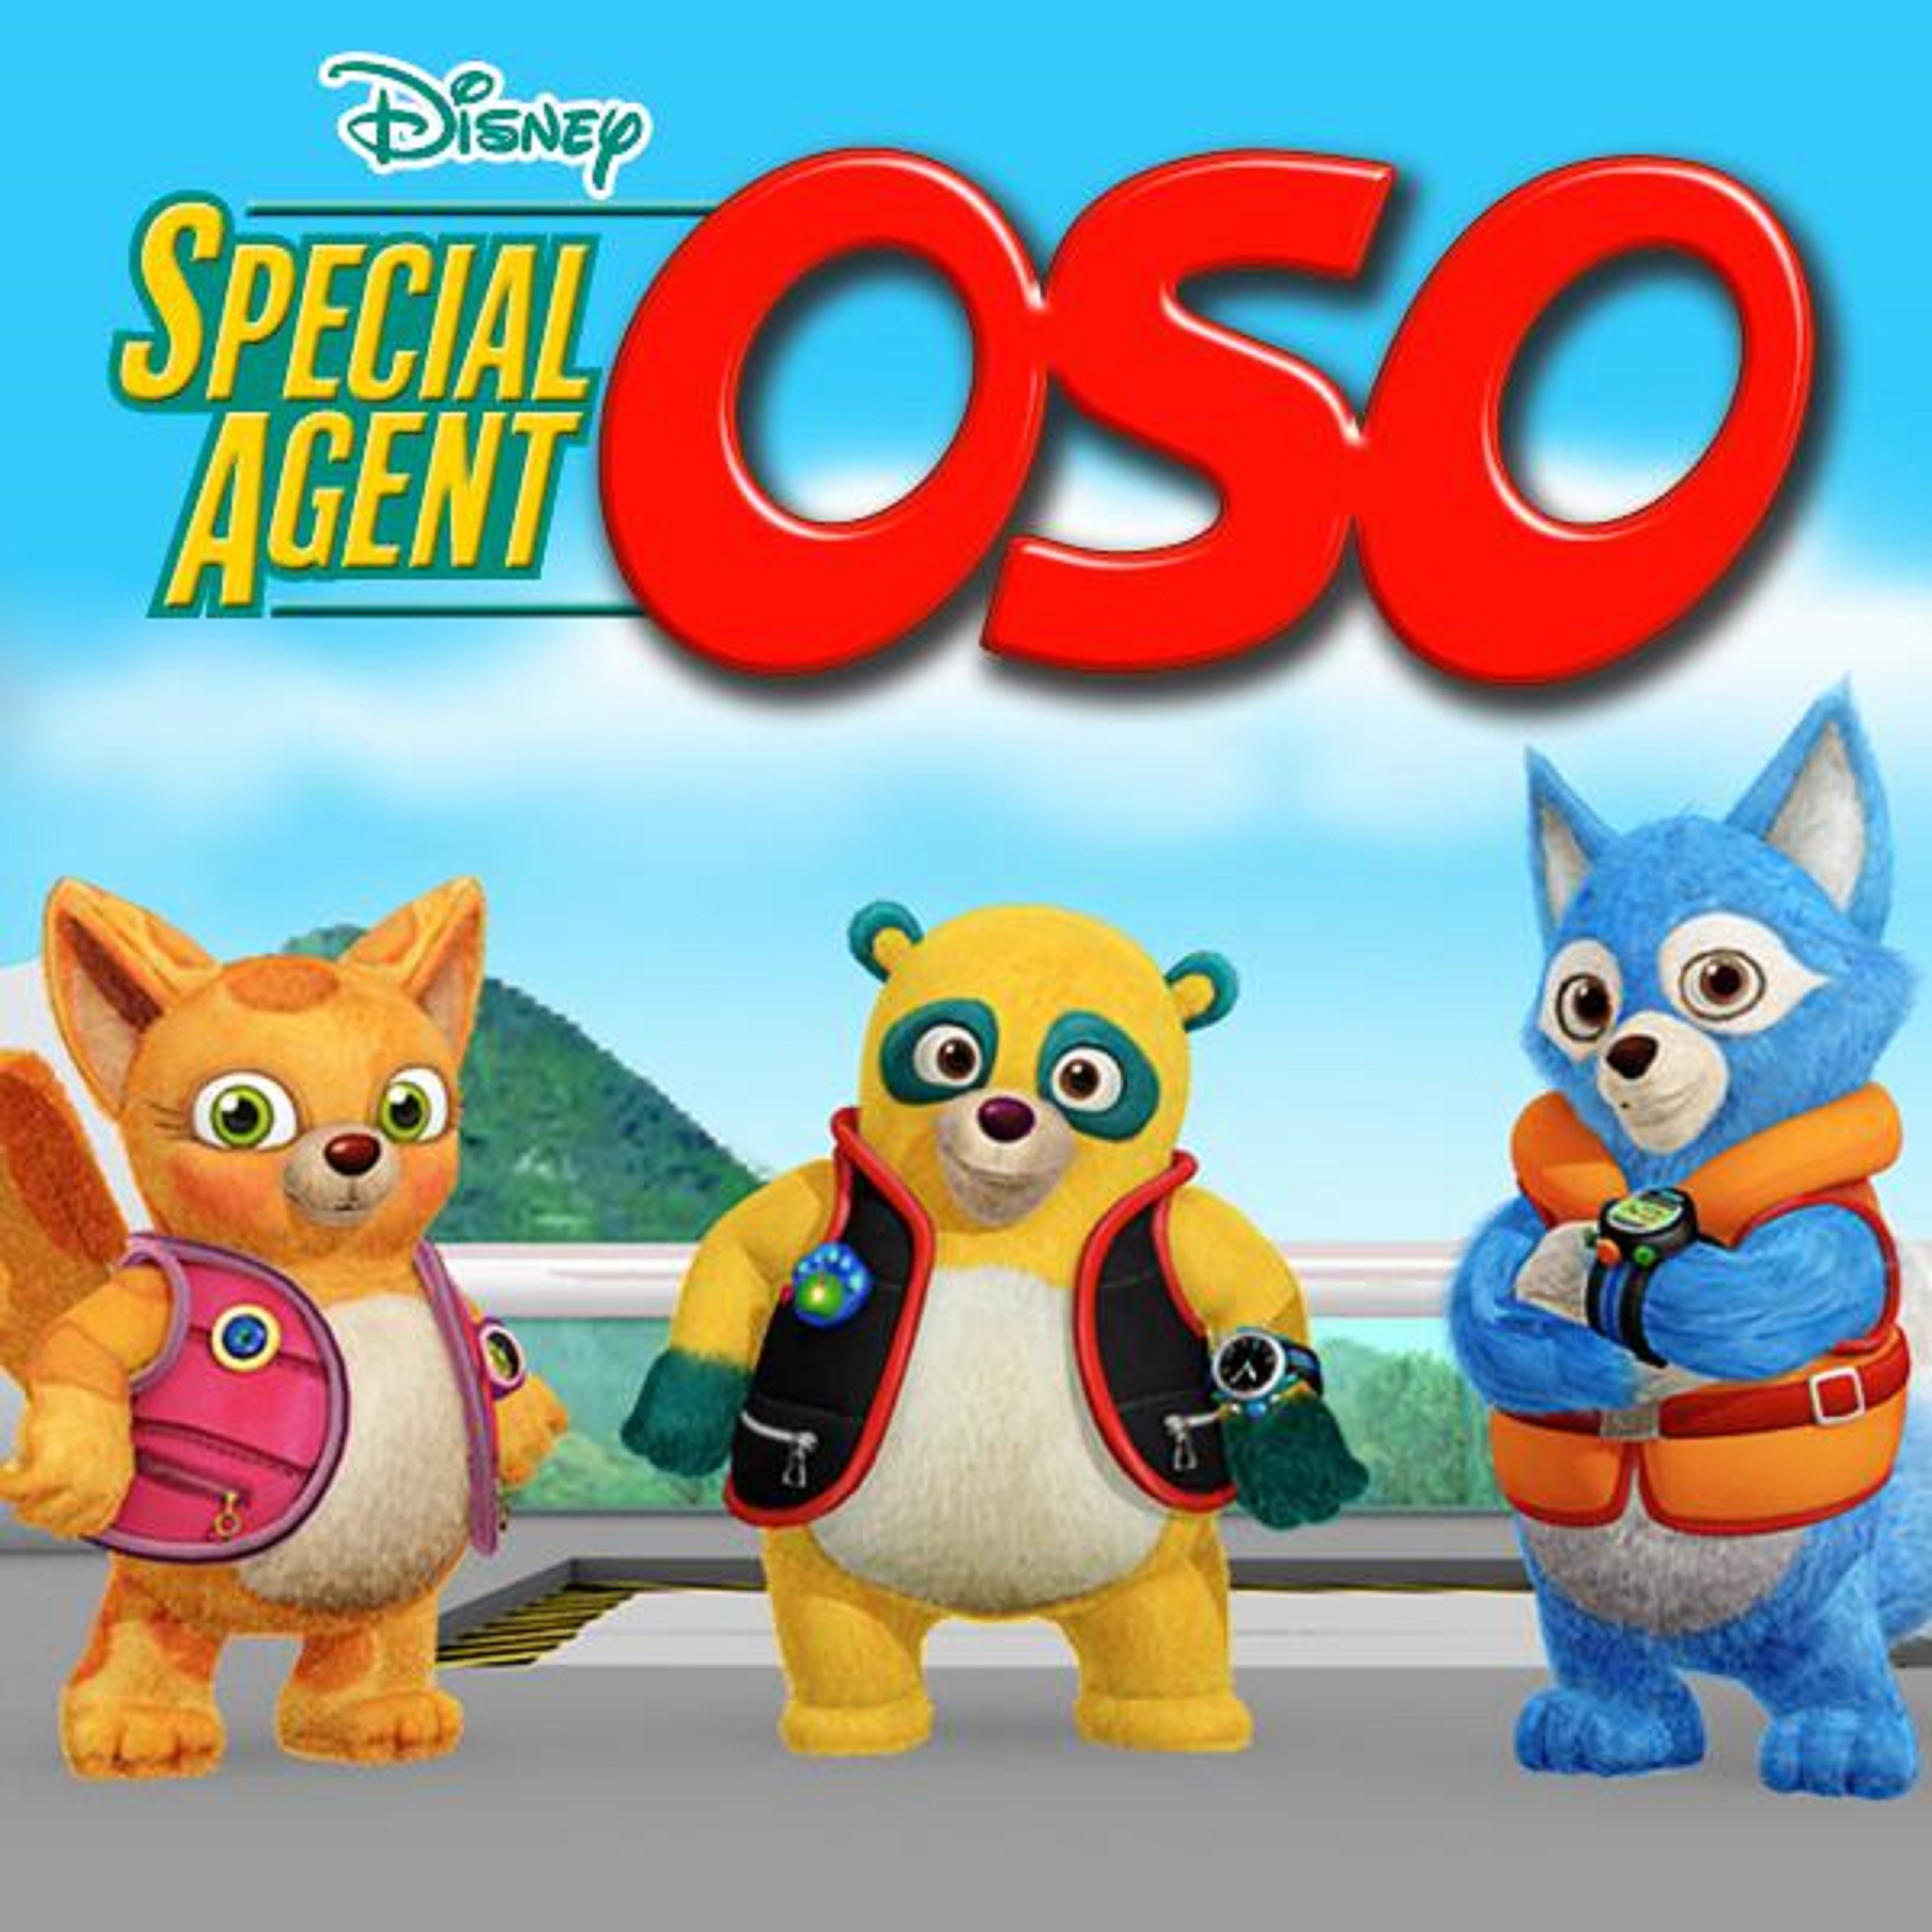 special agent oso special agent oso shutterbug